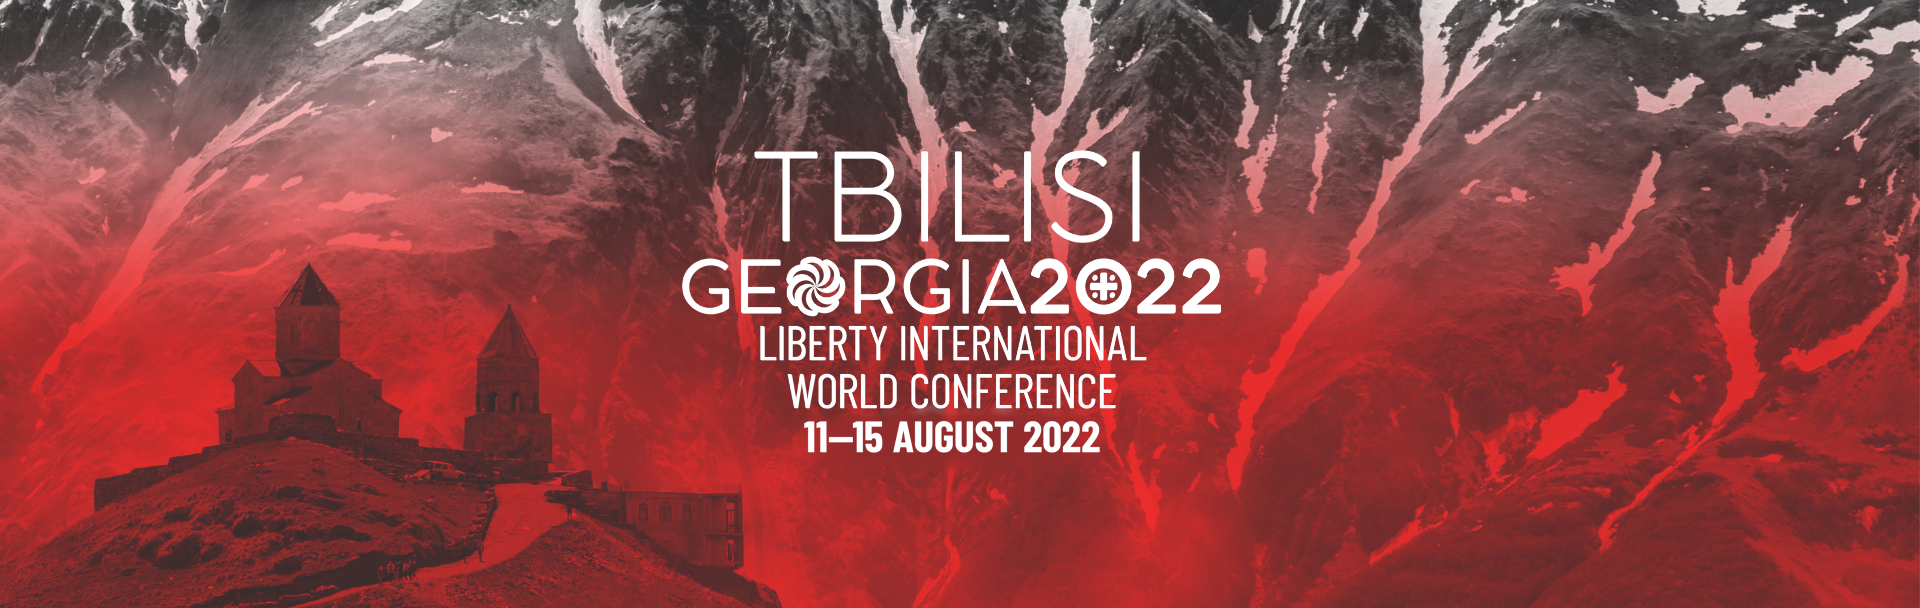 Liberty International World Conference Tbilisi 2022 – registration open!